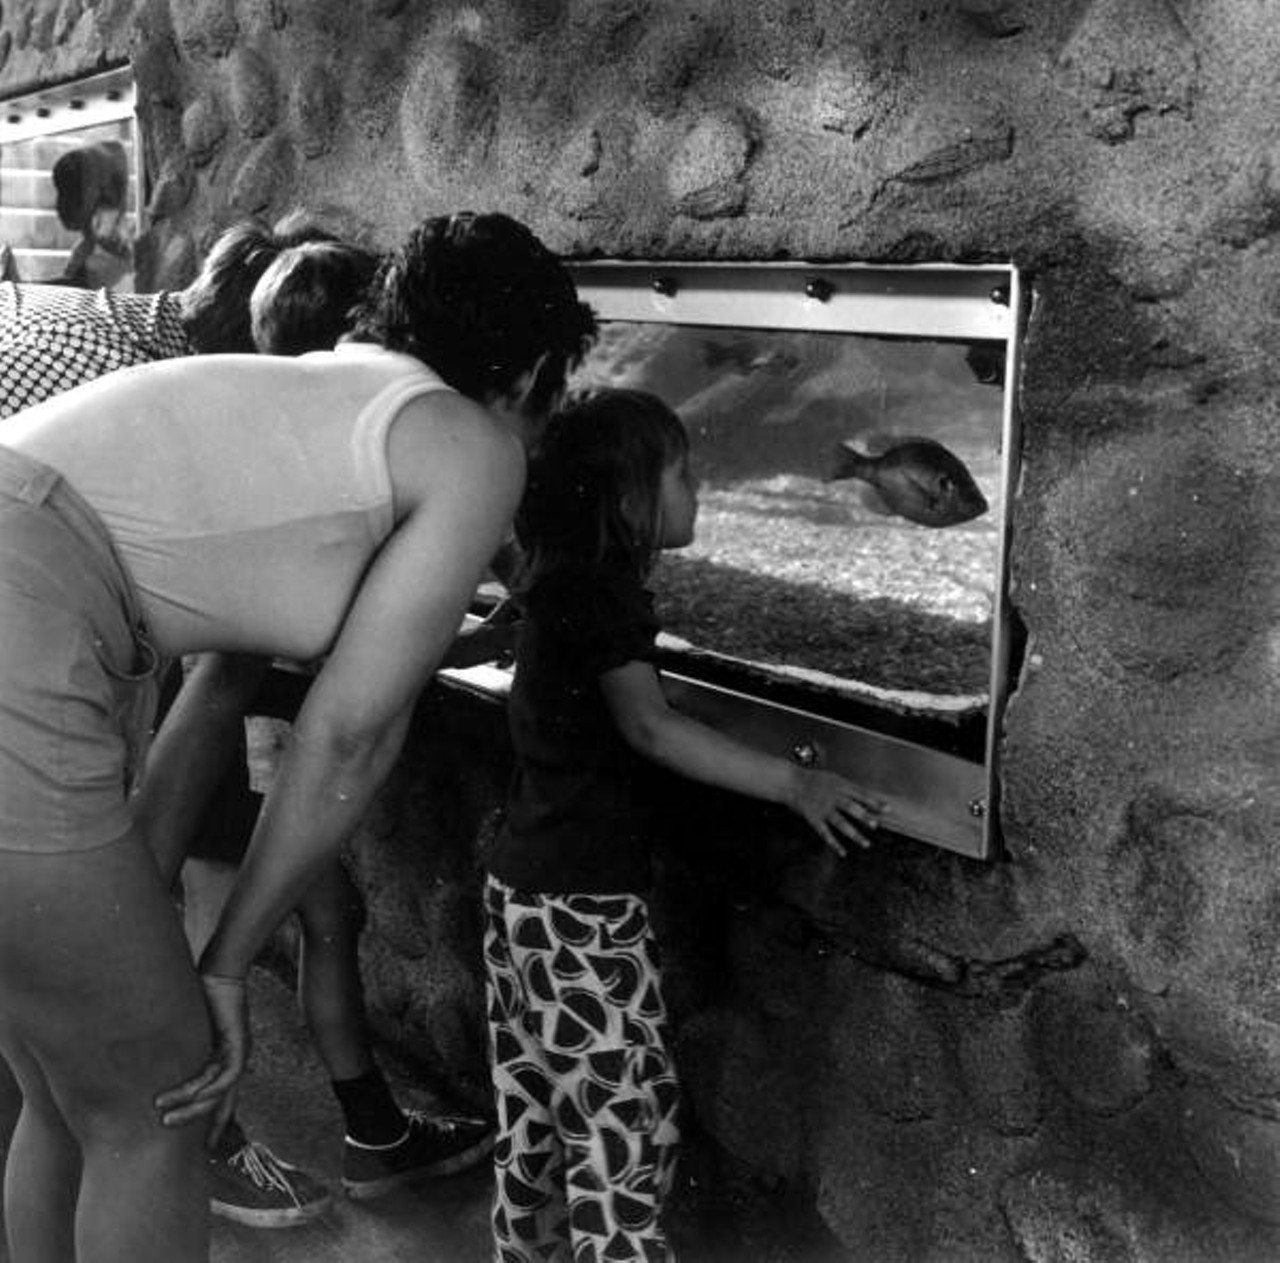 Tourists viewing aquarium at Busch Gardens. 1975.